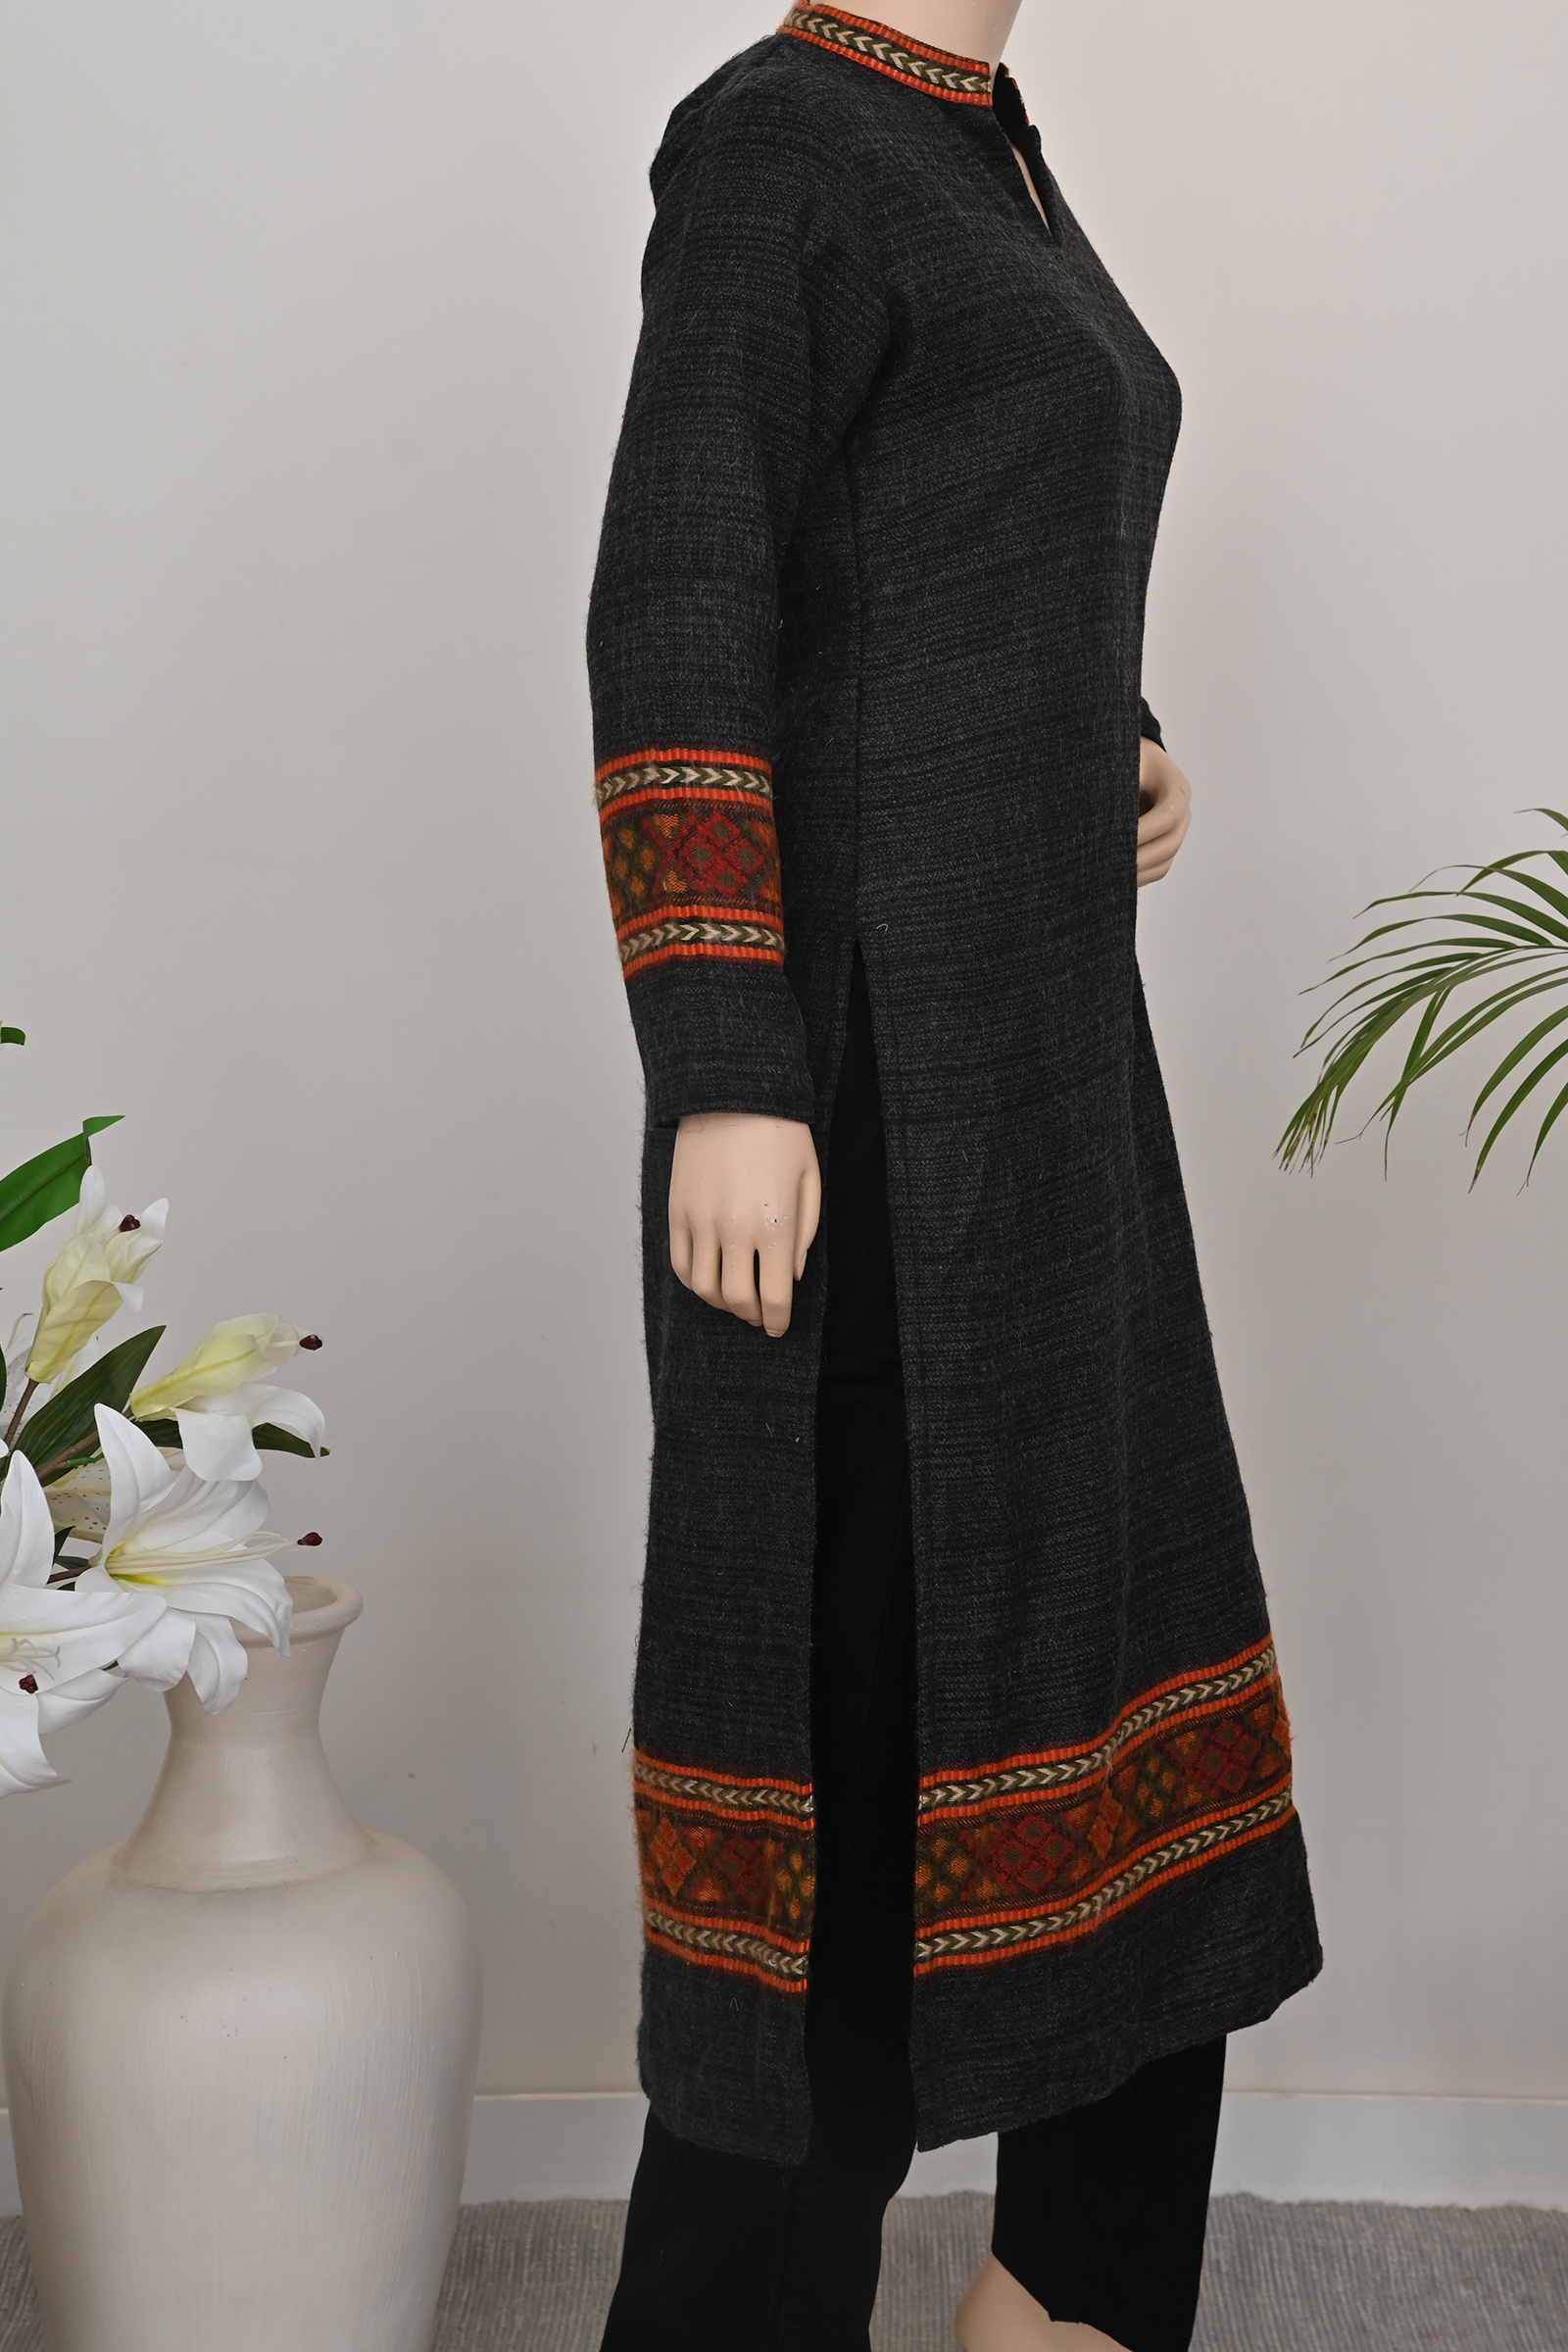 Elegance woolen beautiful Kurtis wd beautiful attached jacket style Kurtis  size 38 40 42 available RATE 1245/- COURIER… | Kurti designs, Woollen  dresses, Kurti